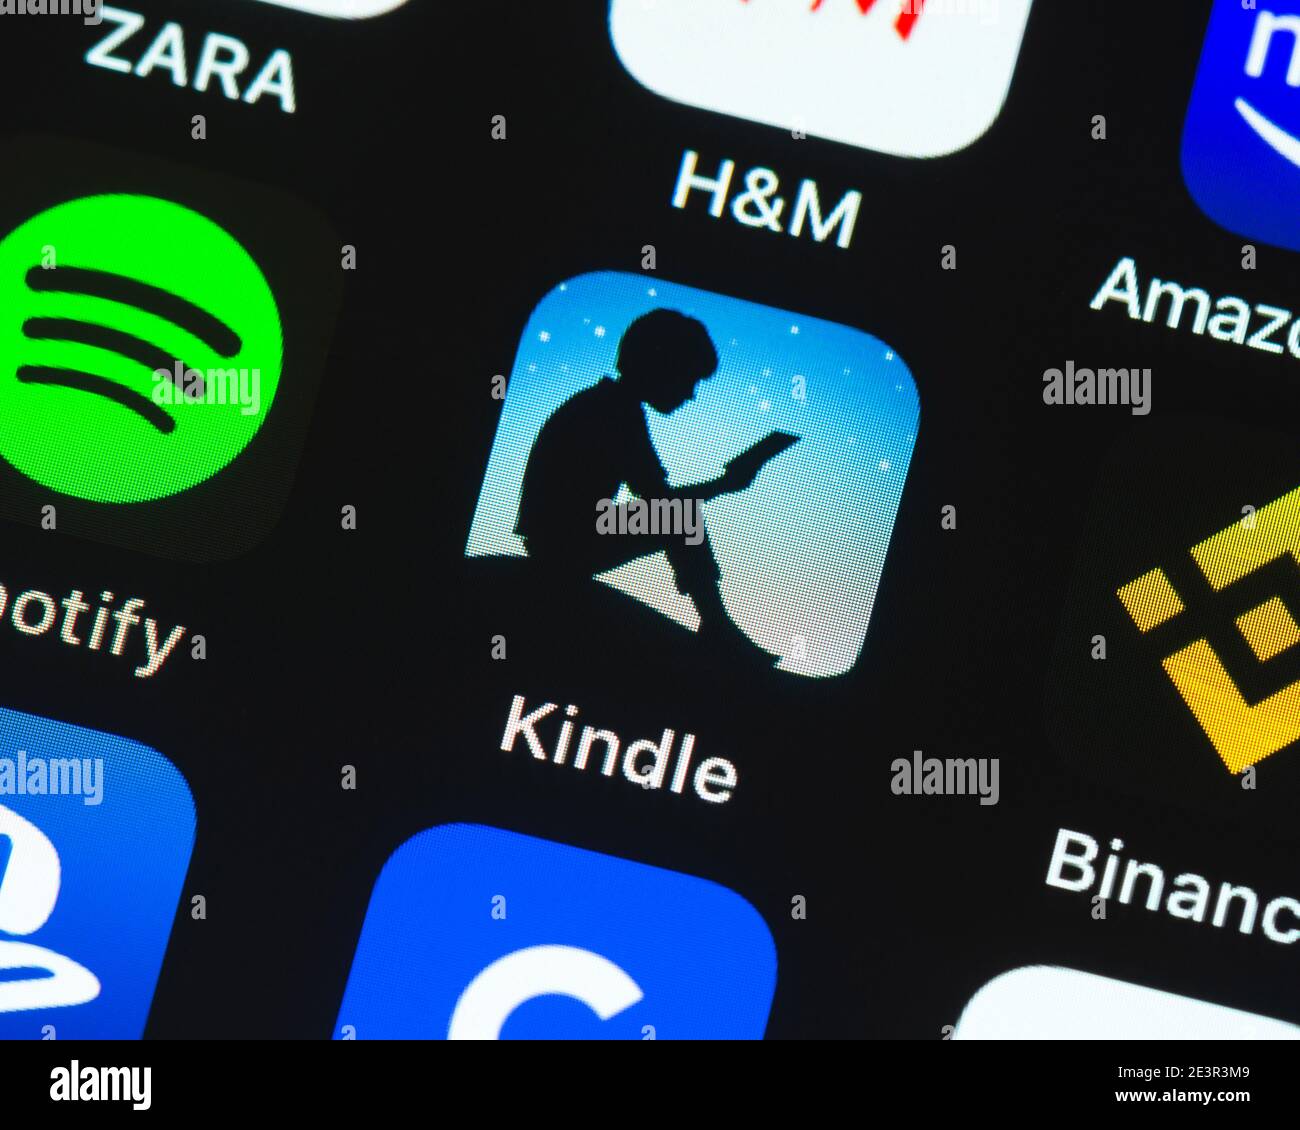 Kindle app icon on Apple iPhone screen Stock Photo